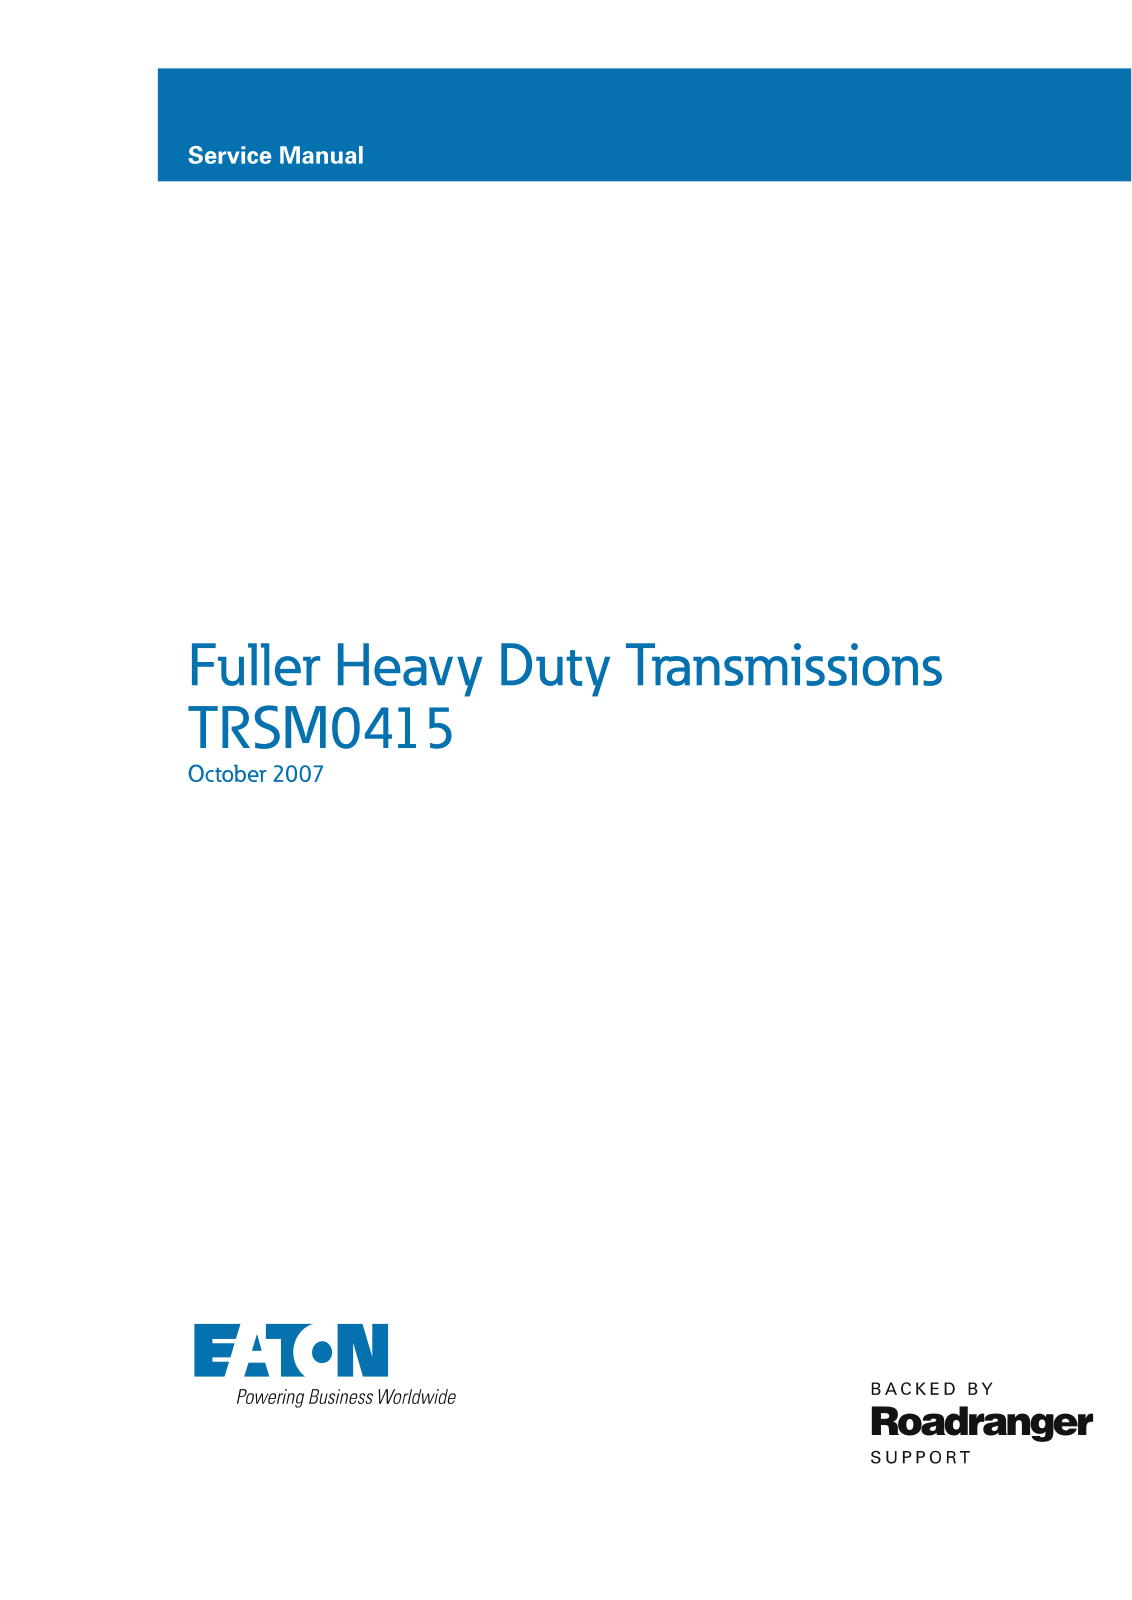 Eaton Transmission RT-8609 Service Manual